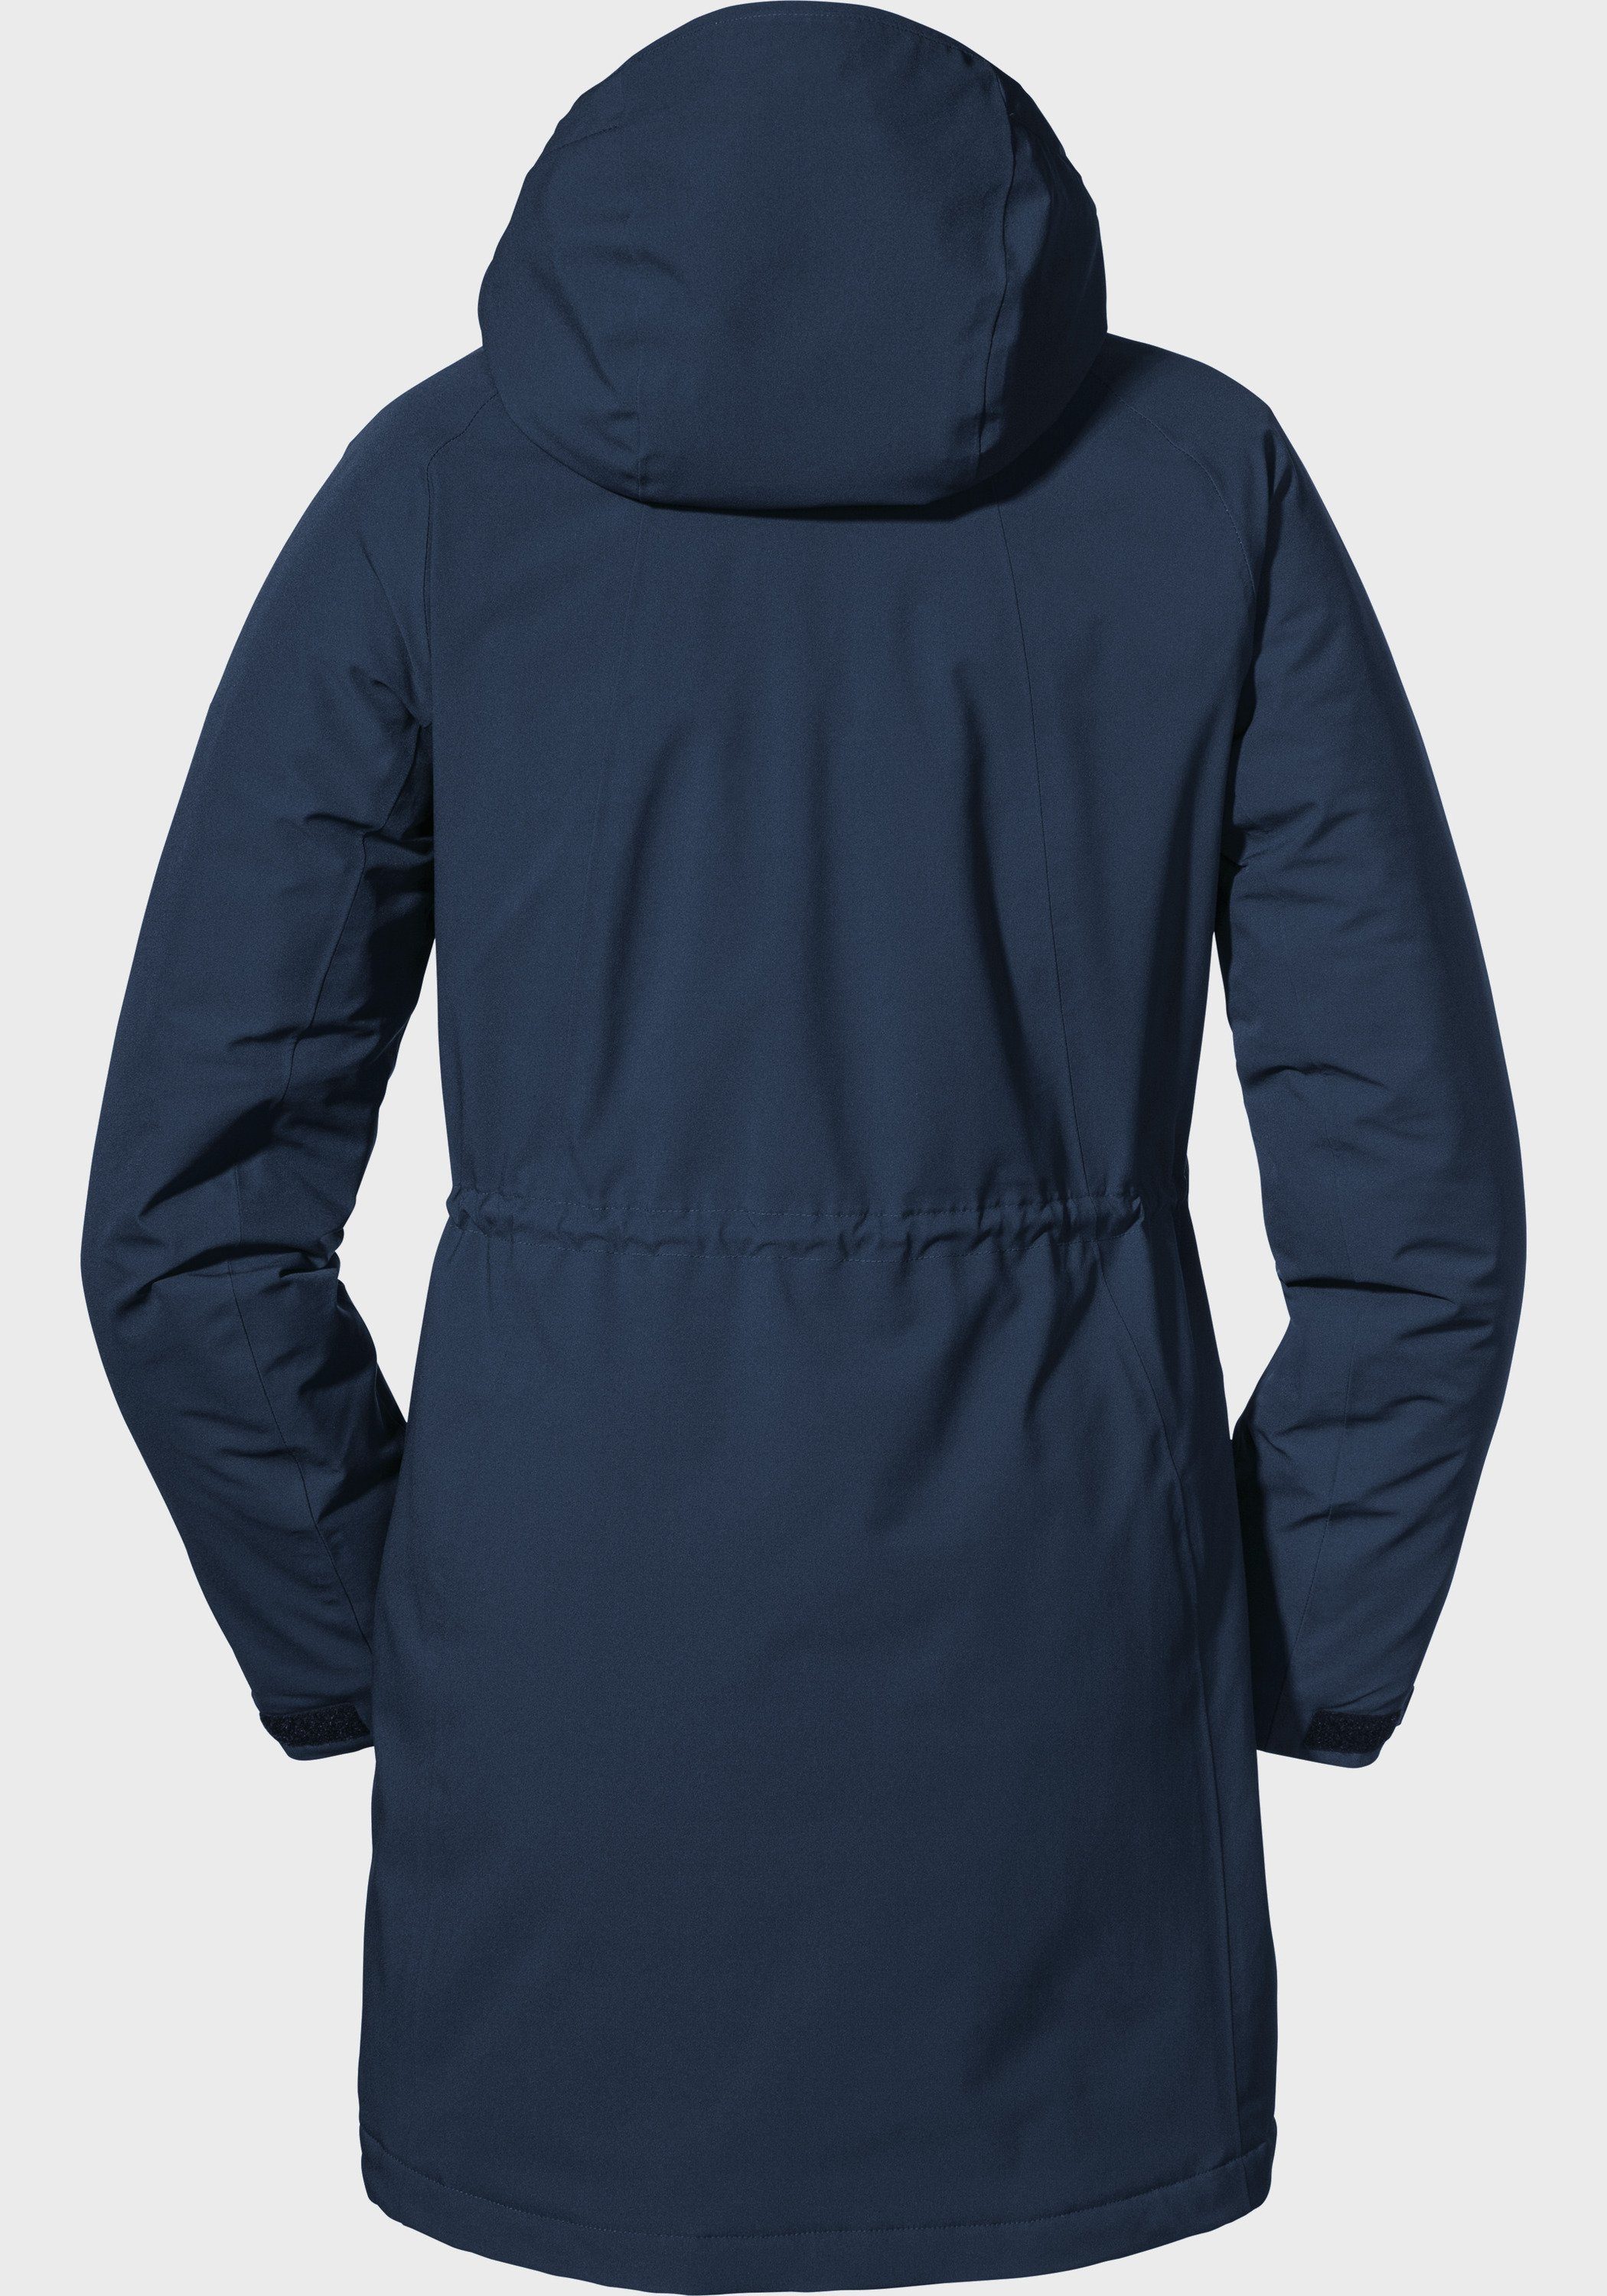 L Schöffel blau Outdoorjacke Jacket Ins. Bastianisee